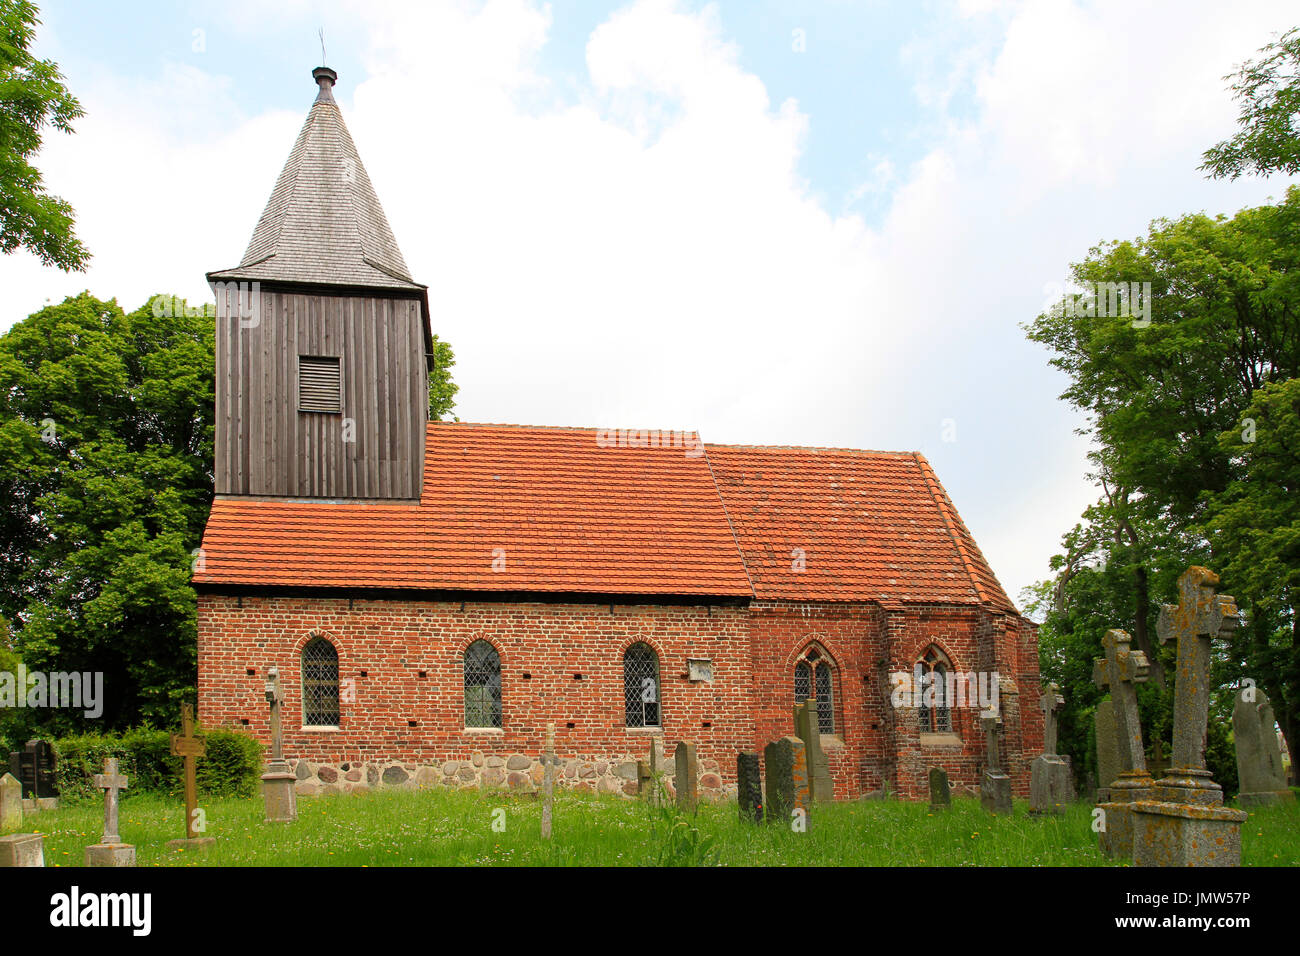 Redbrick church in Gross Zicker, Moenchgut peninsula, Ruegen Island, or Rugia Island, Mecklenburg-Western Pomerania, Germany, Europe Stock Photo